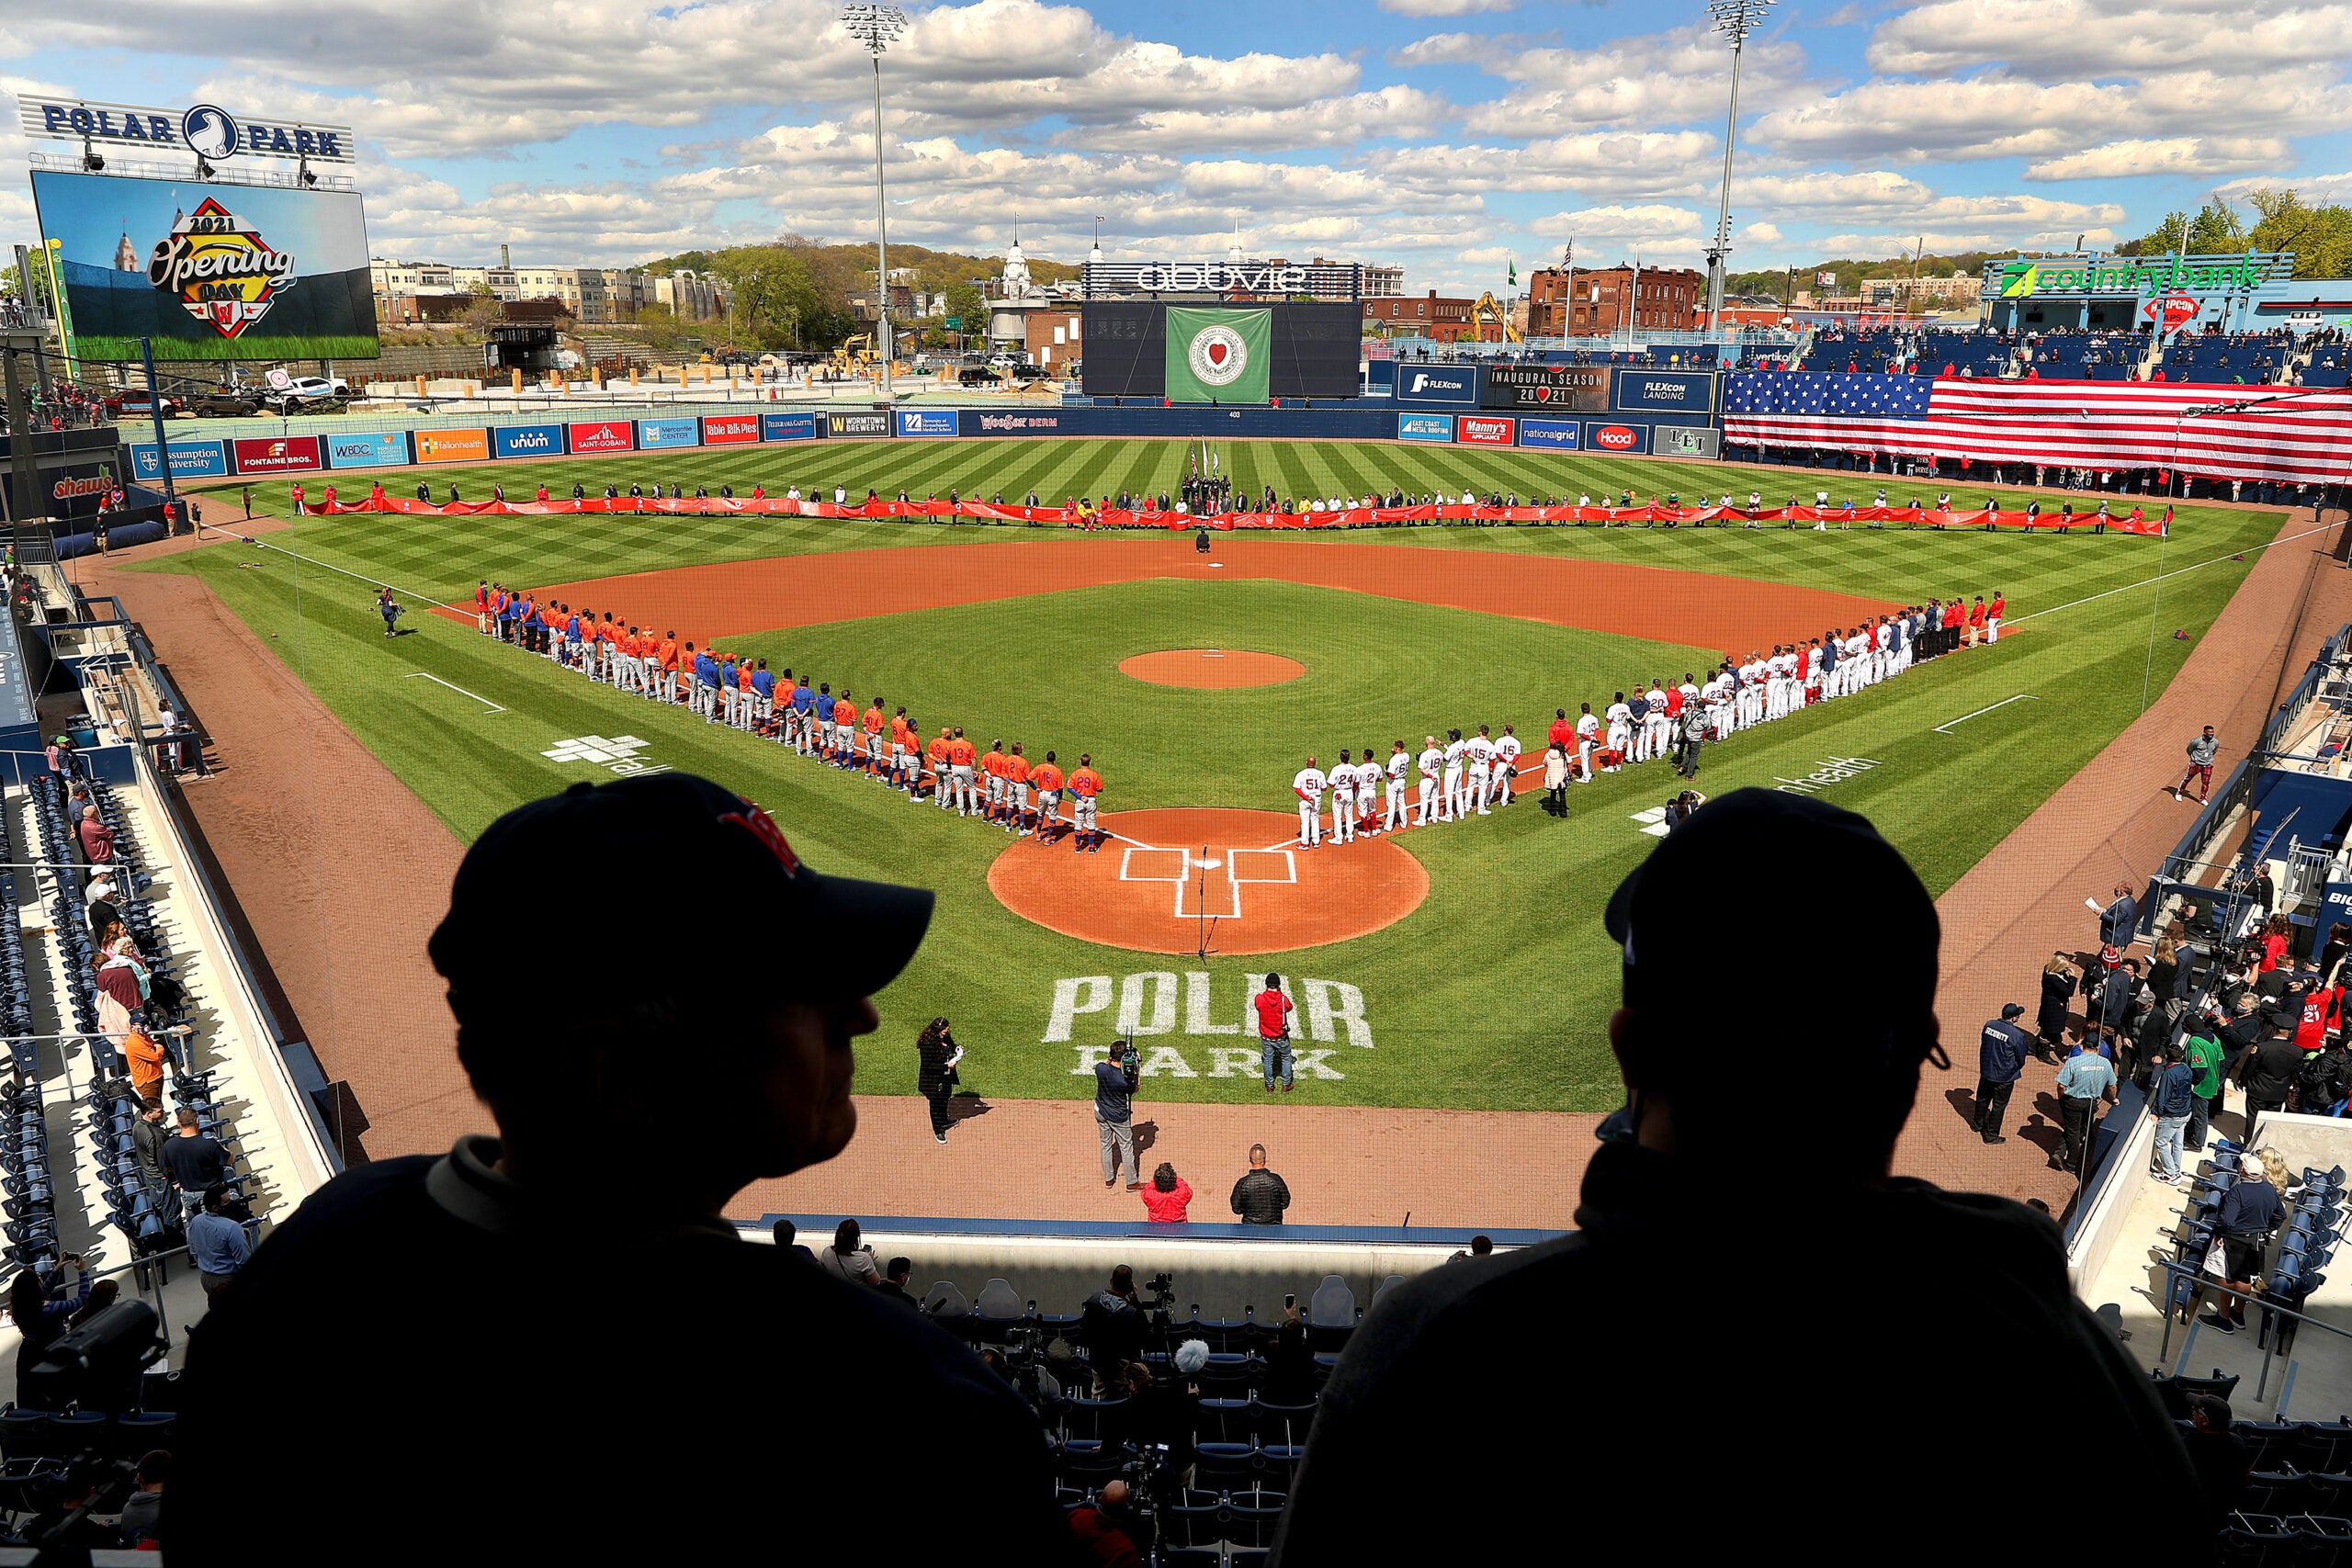 Minor League Ballpark Guide: Red Sox